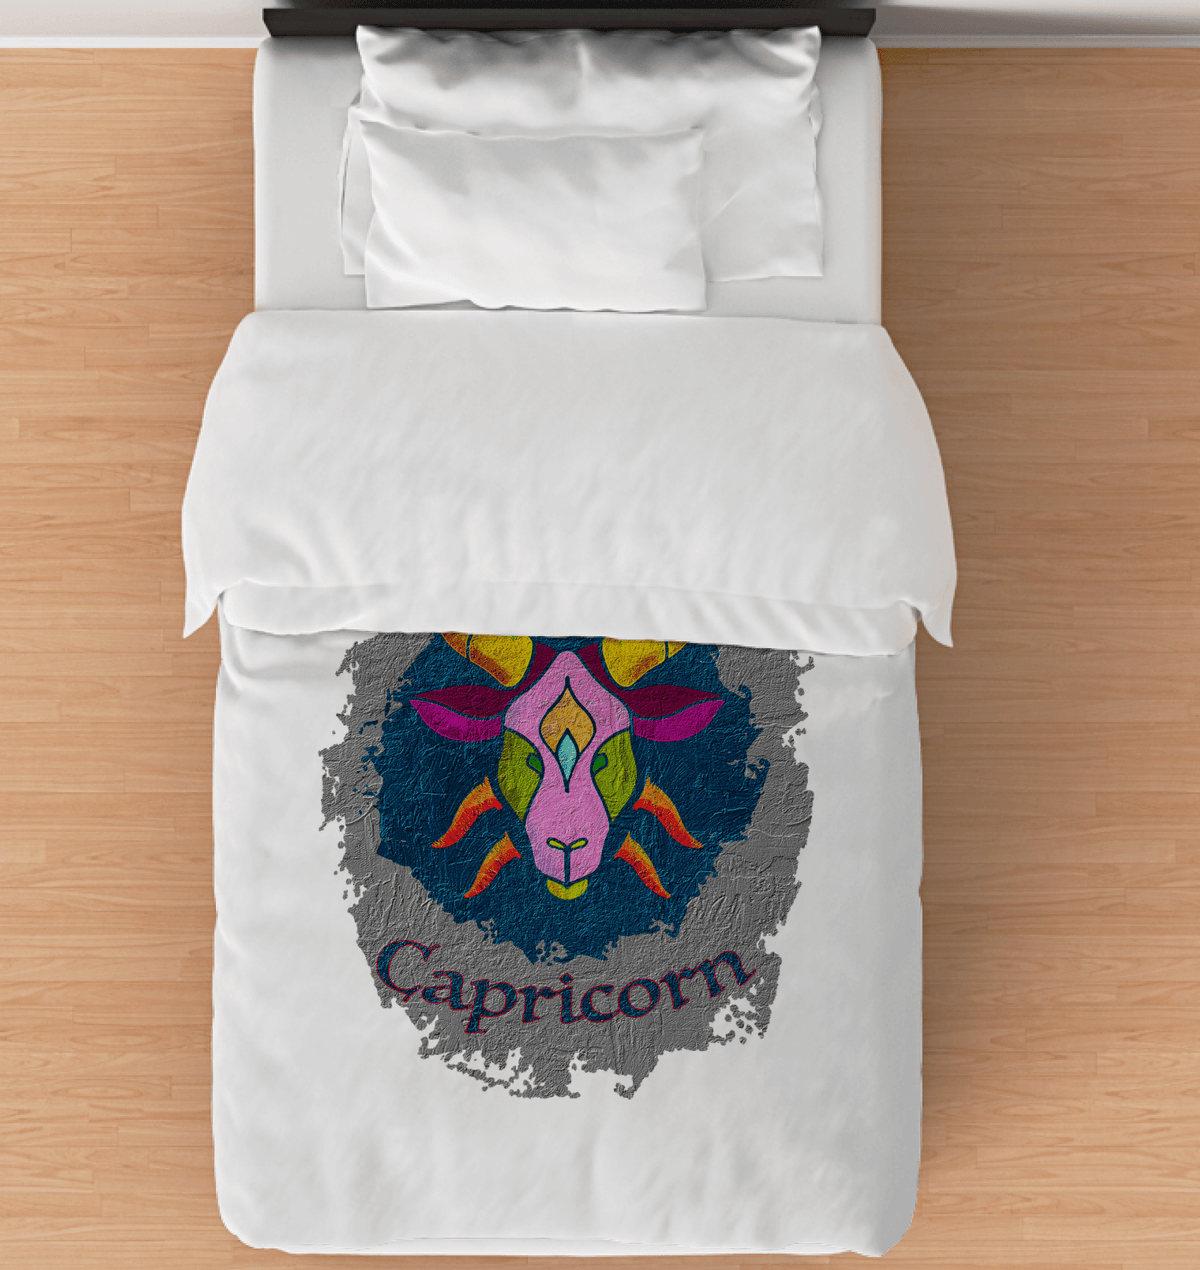 Capricorn Comforter Twin | Zodiac Series 11 - Beyond T-shirts